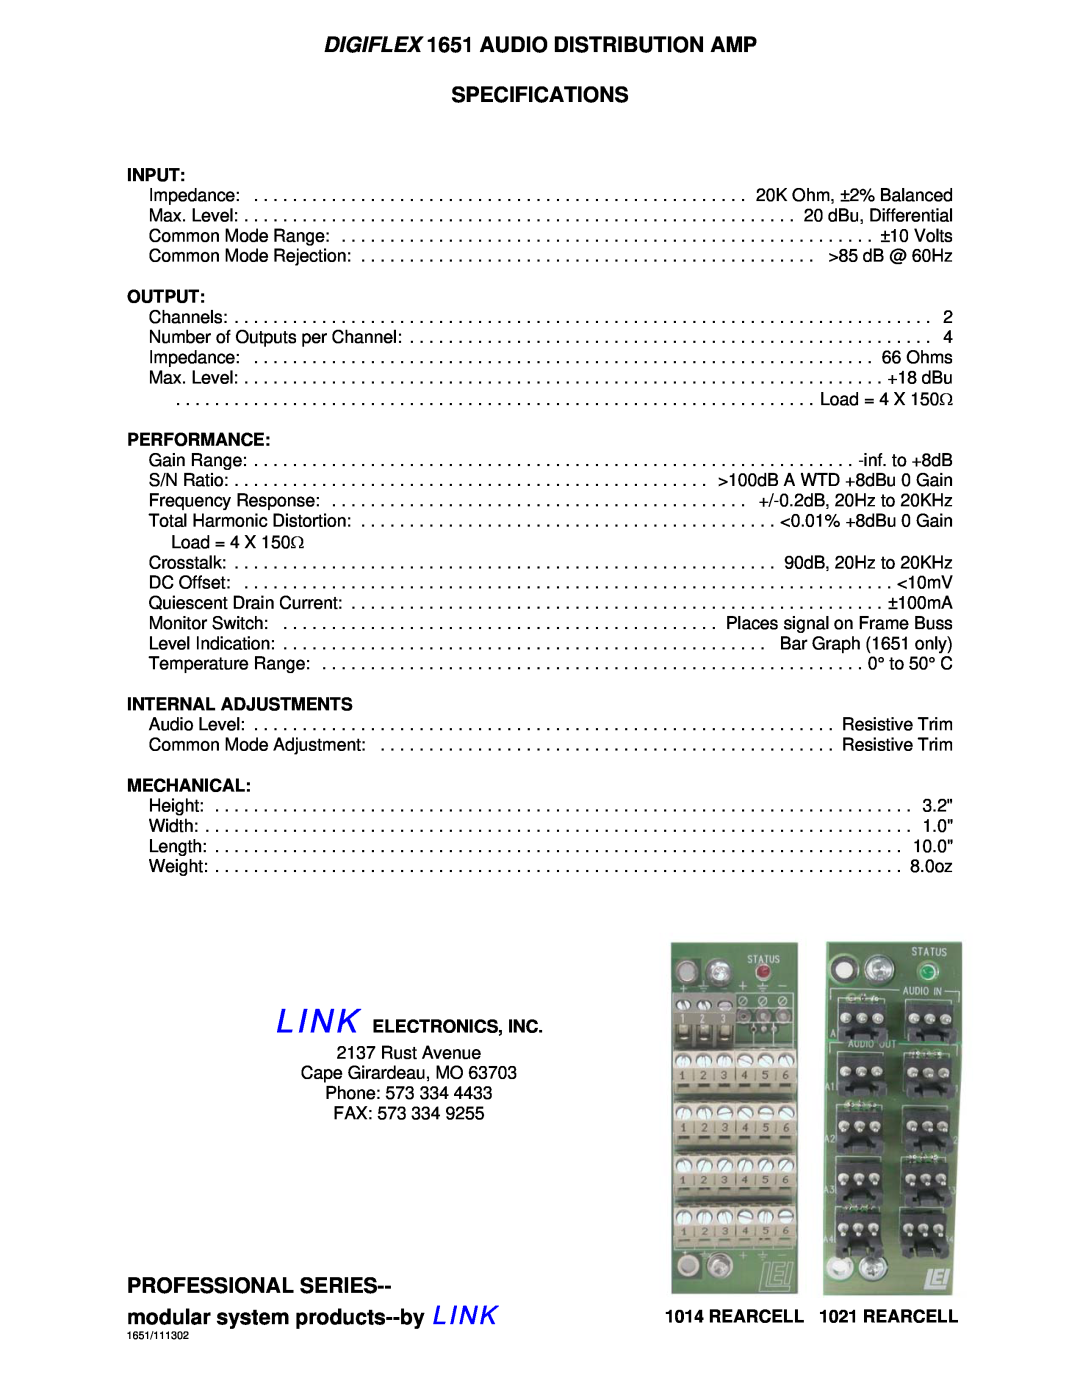 Link electronic DigiFlex 1651 warranty Input, Output, Performance, Internal Adjustments, Mechanical, Link Electronics, Inc 